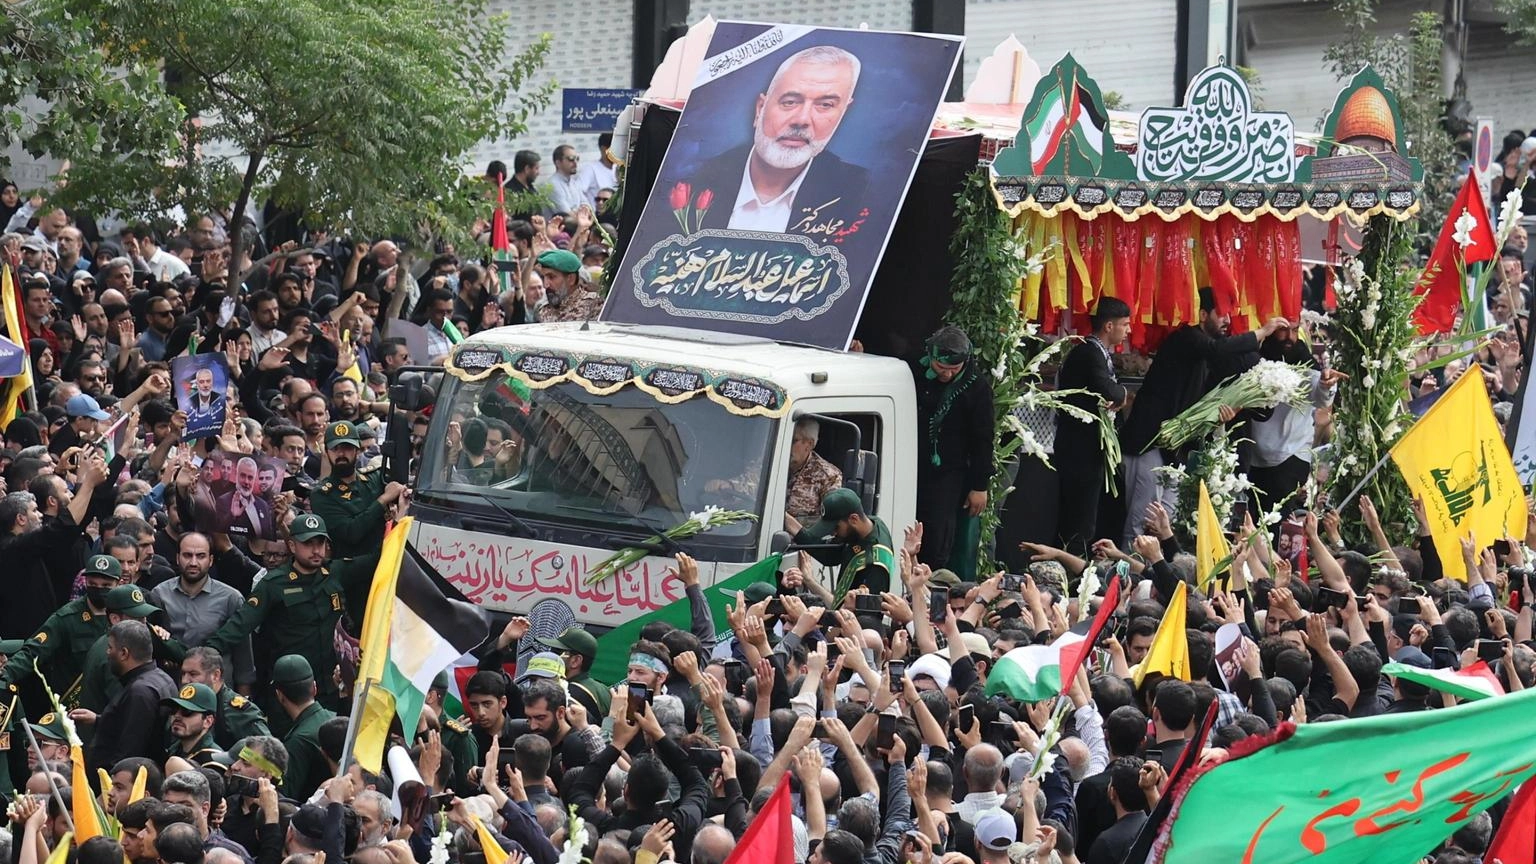 Nyt, 'in Iran decine arresti sospetti complici omicidio Haniyeh'